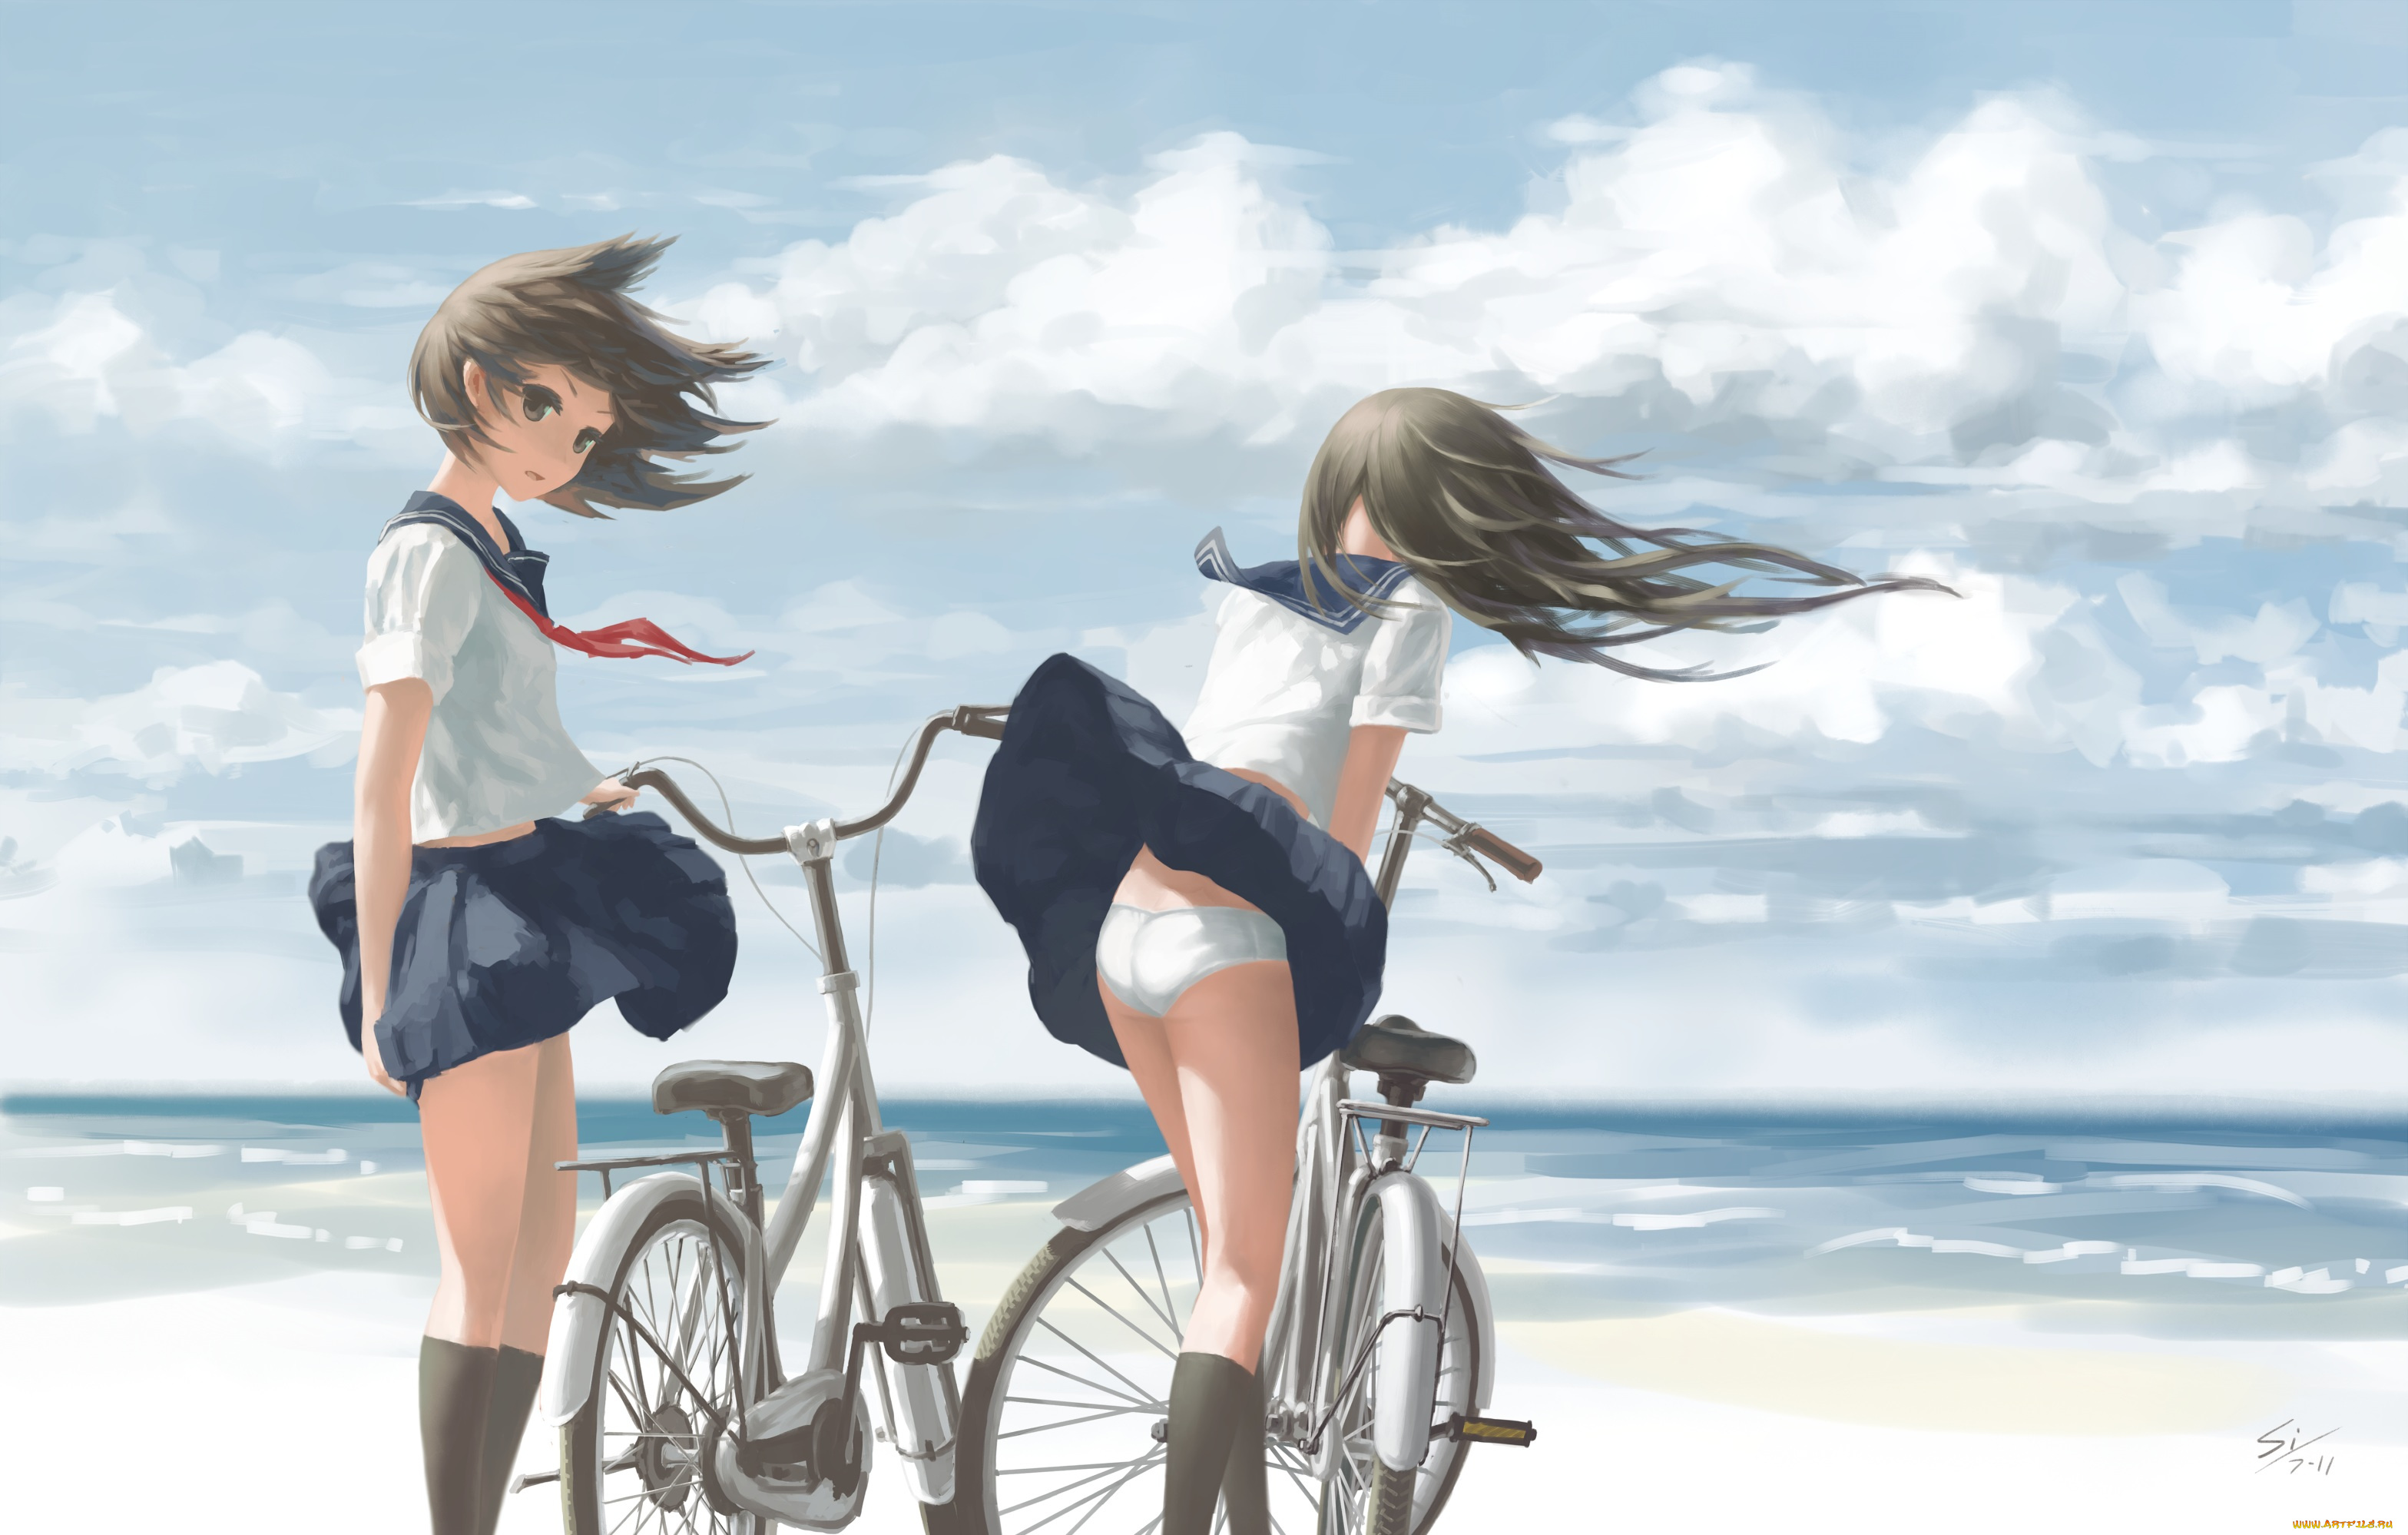 аниме, unknown, , другое, si-ruanmumu, арт, девушки, пляж, море, велосипед, облака, небо, ветер